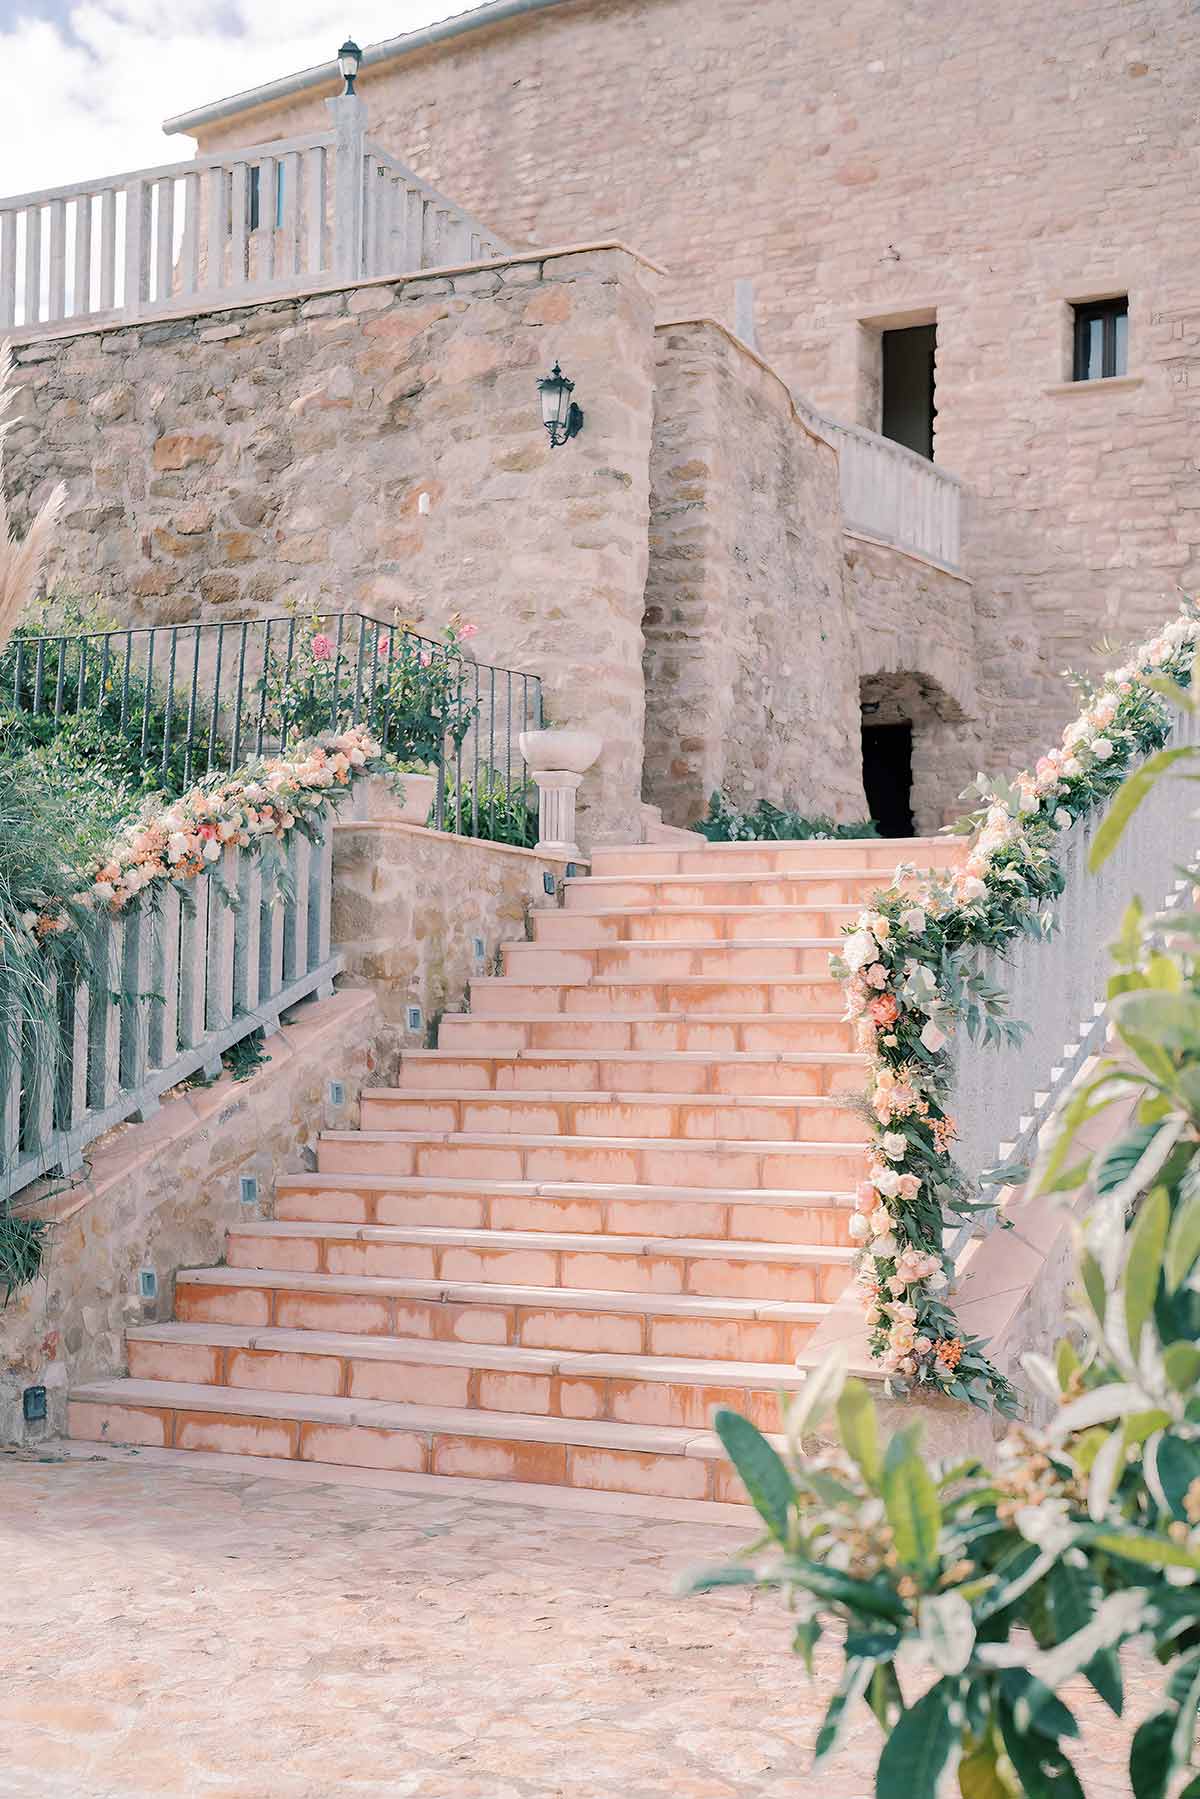 Escalinata del Castillo de Enfesta